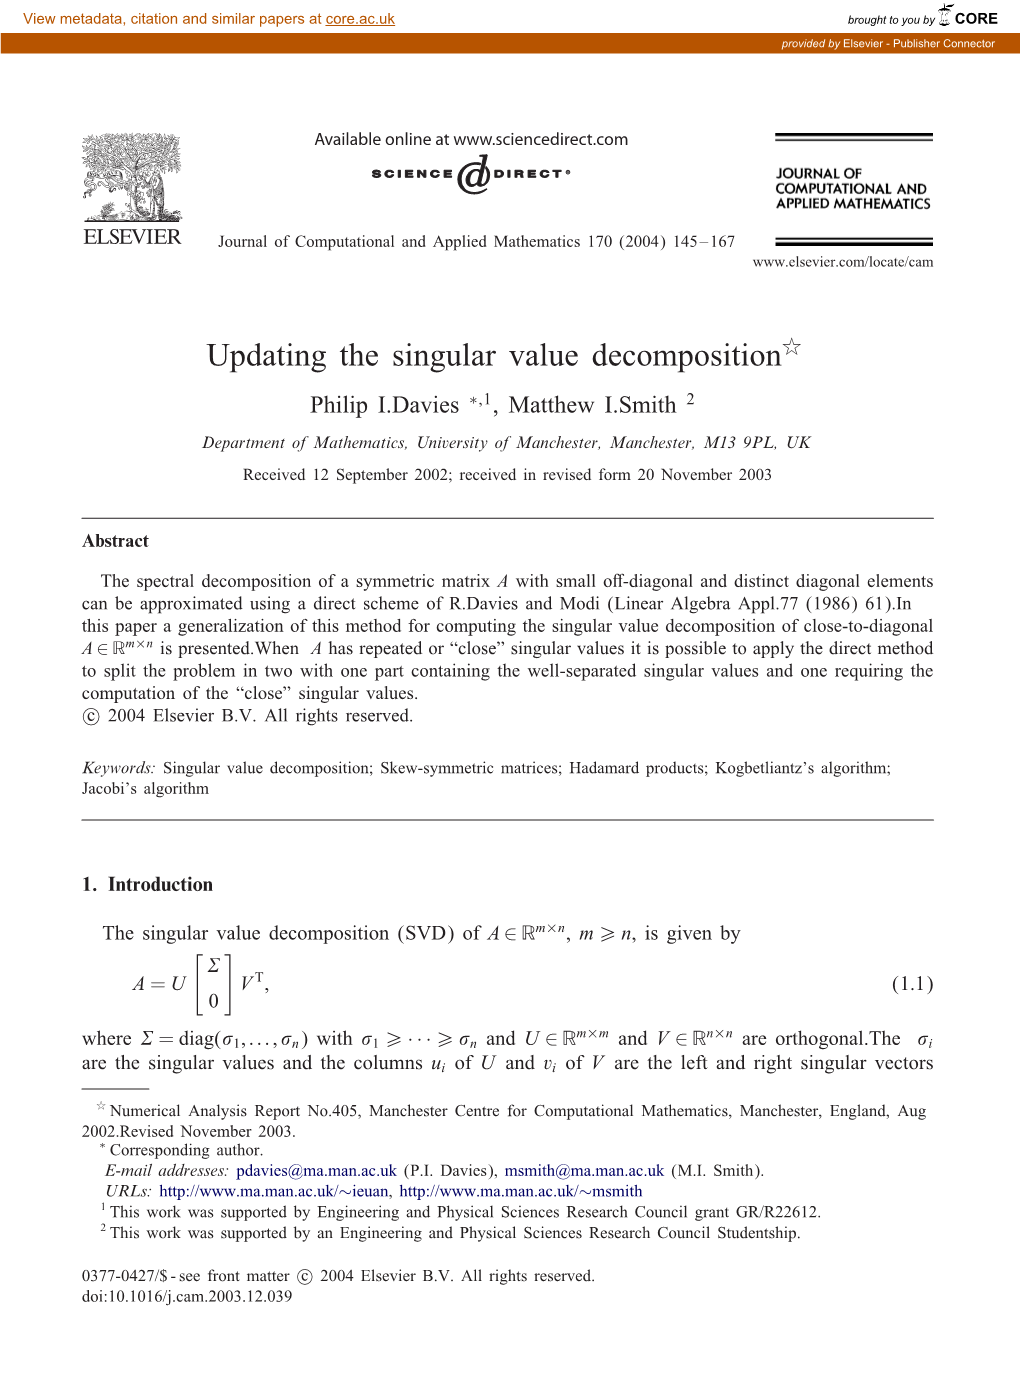 Updating the Singular Value Decomposition Philip I.Davies ∗;1, Matthew I.Smith 2